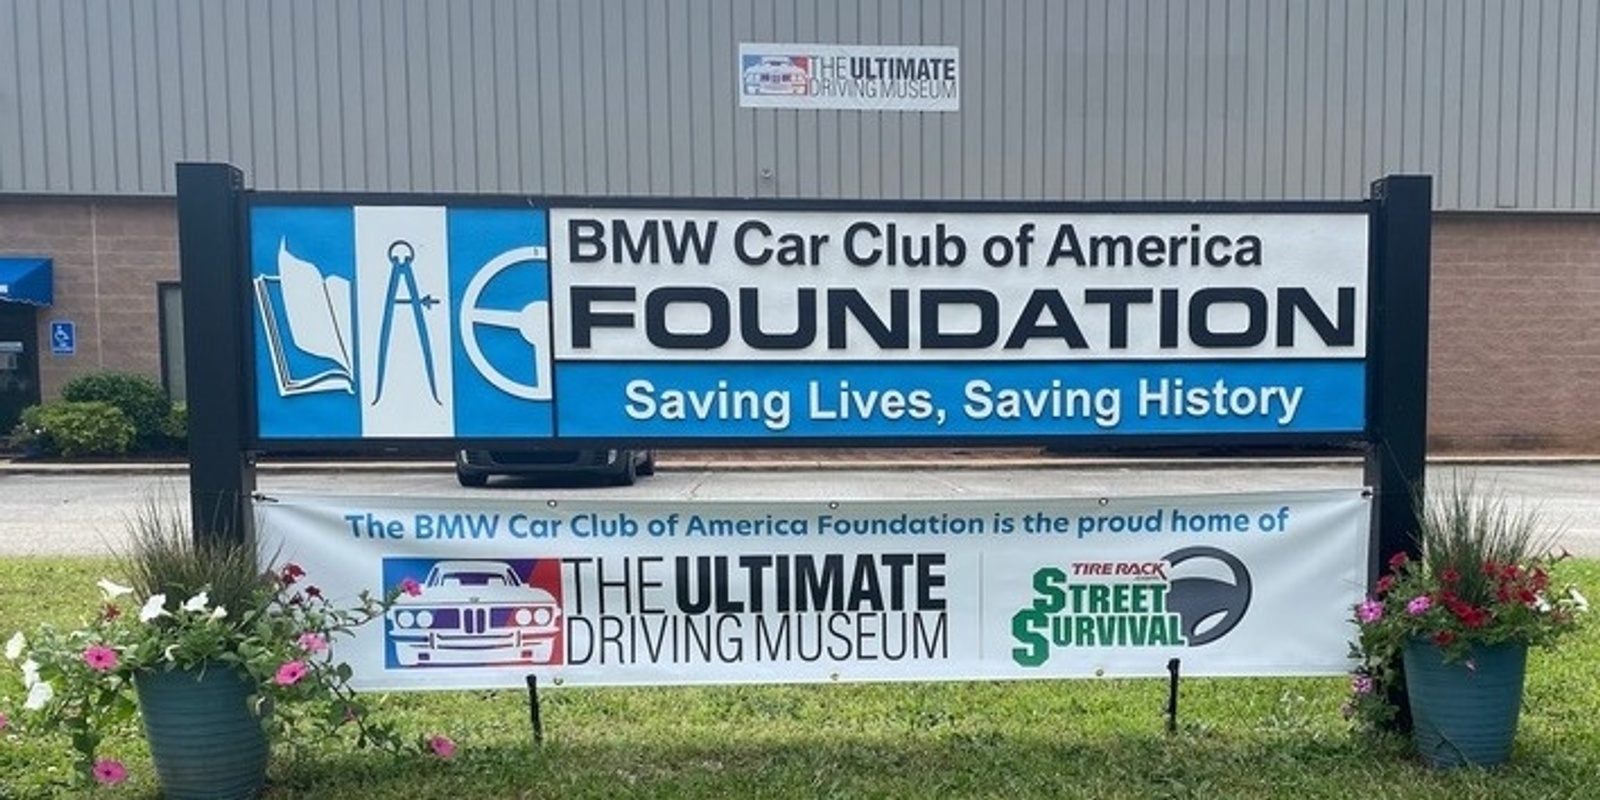 The BMW Car Club of America Foundation's banner